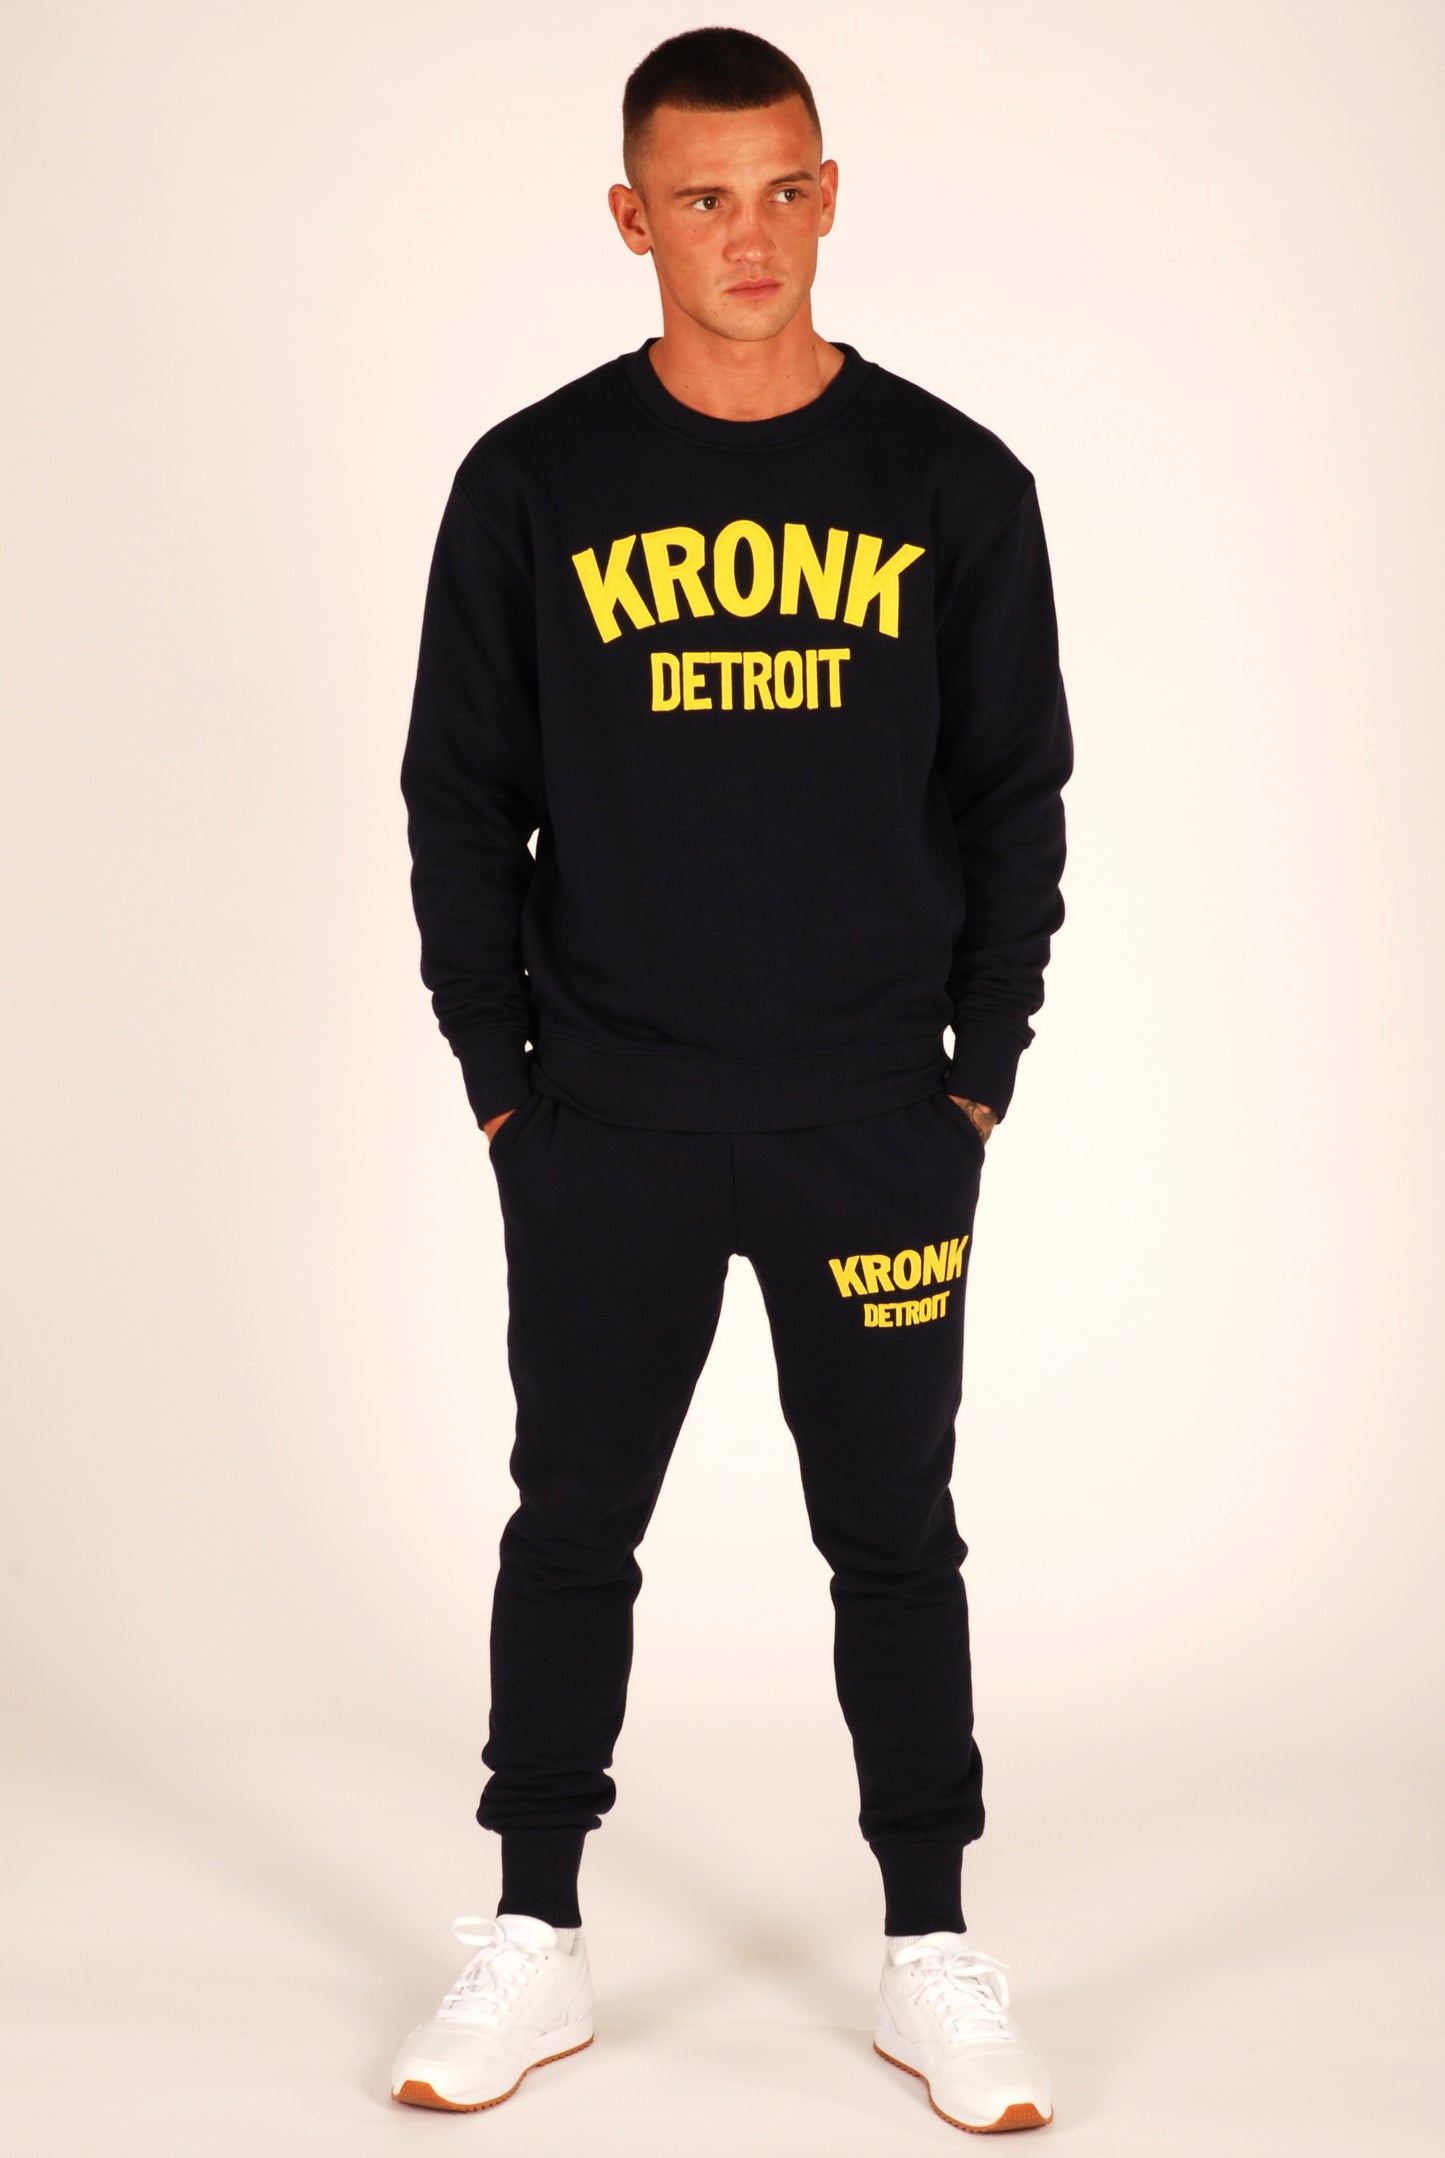 KRONK Detroit Applique Sweatshirt Loose Fit Navy with Yellow Logo